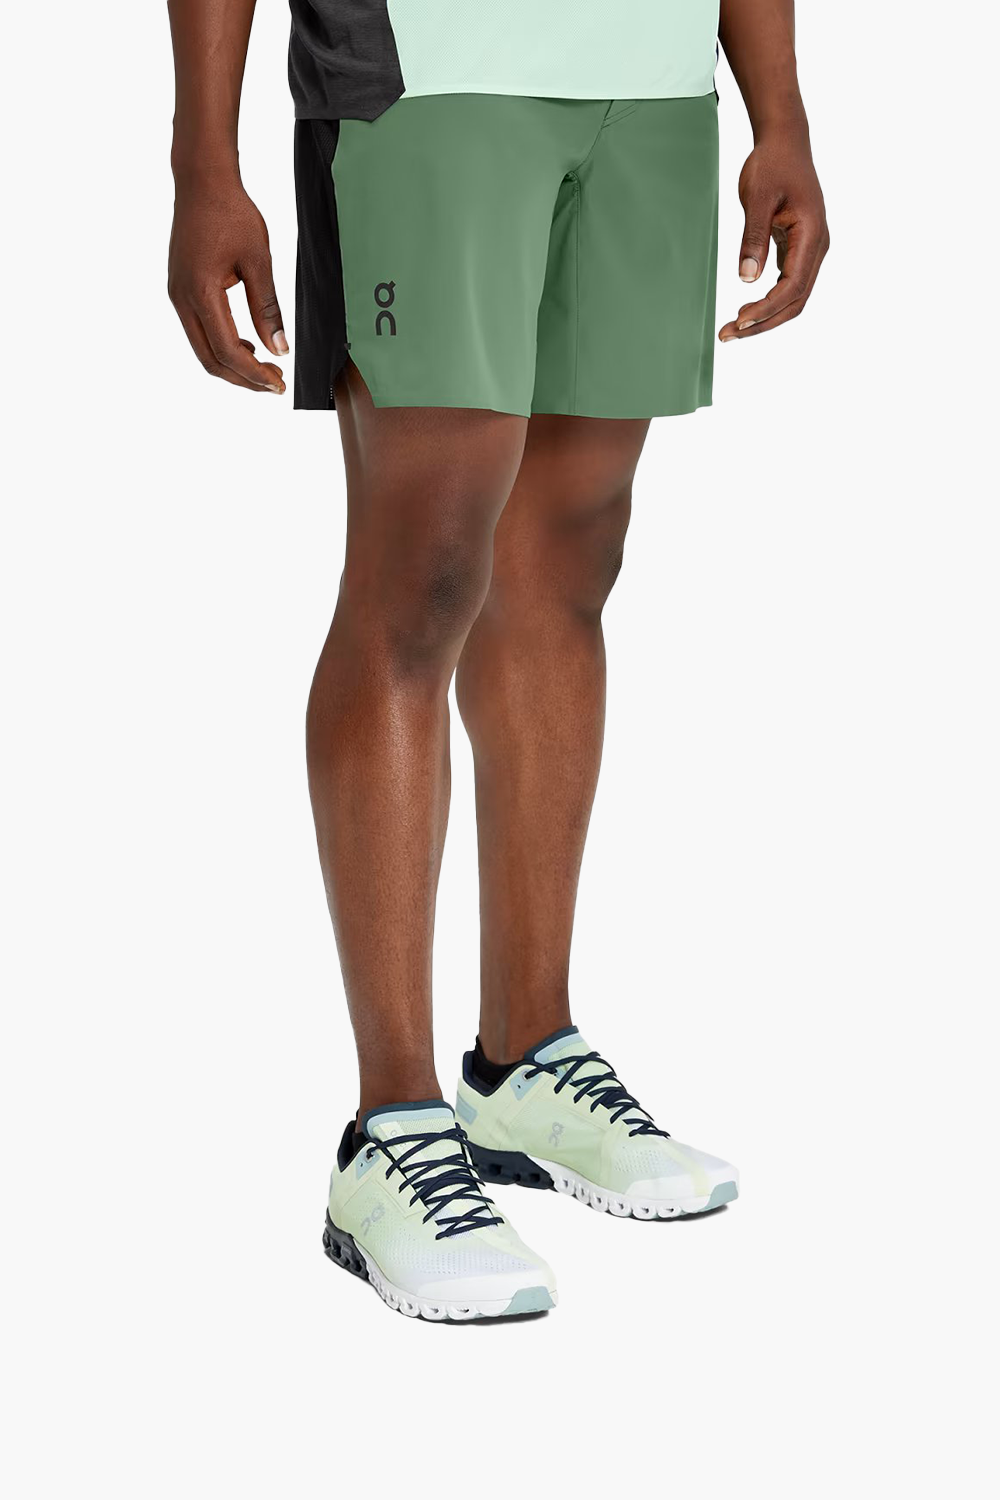 ON | Men's Lightweight Shorts in Ivy/Black